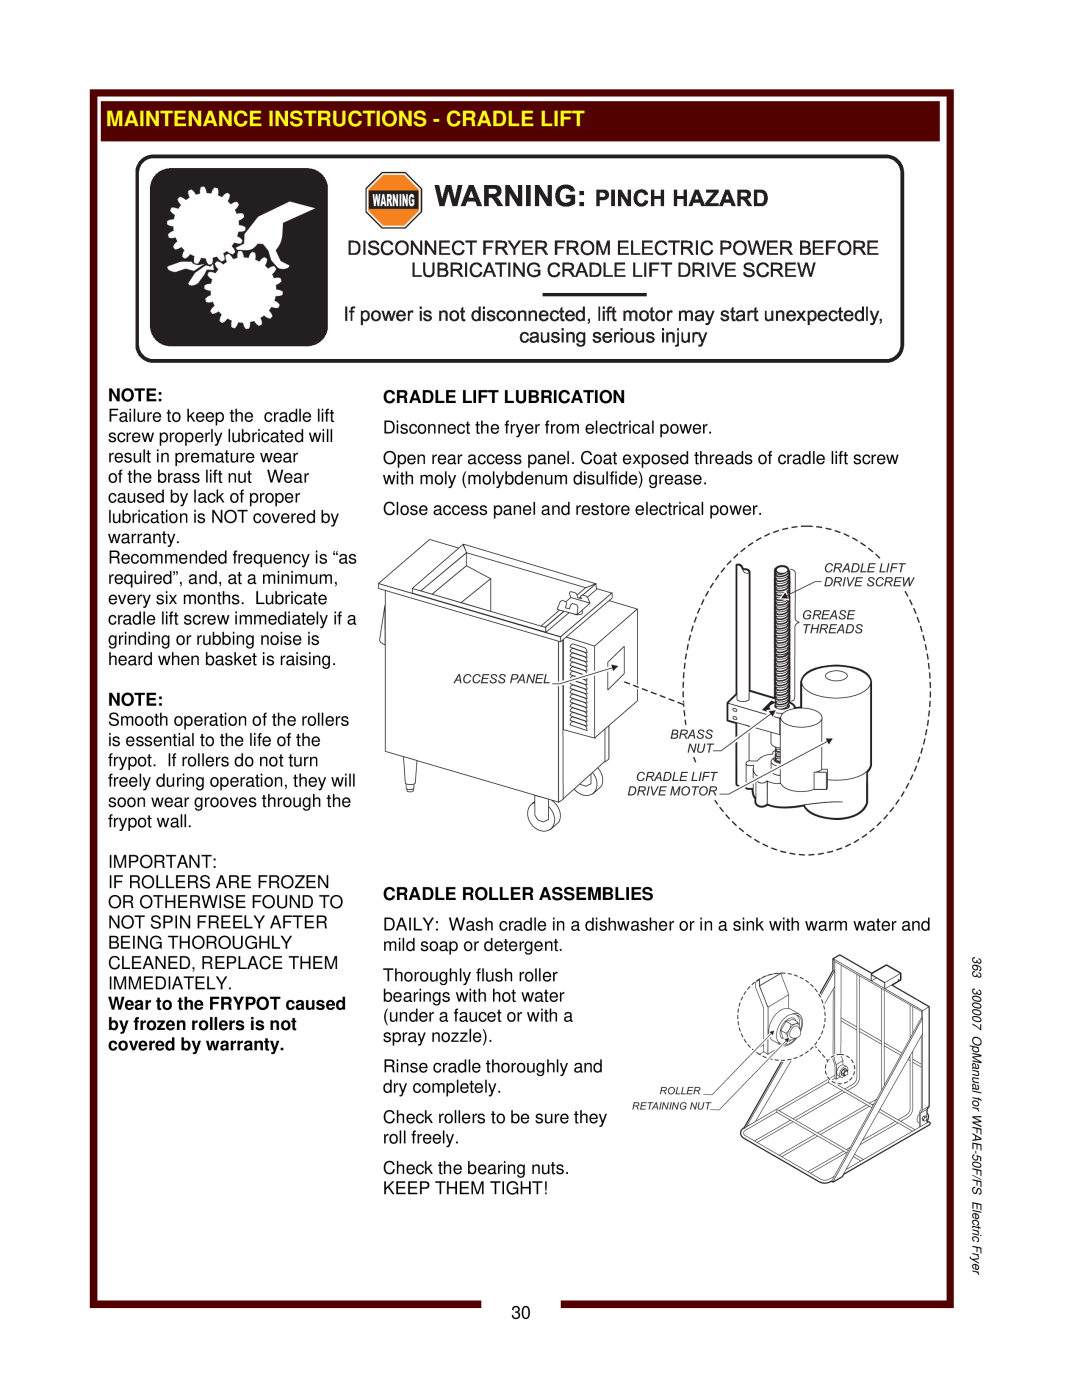 Bloomfield WFAE-55F Warning Warning Pinch Hazard, Maintenance Instructions - Cradle Lift, causing serious injury 